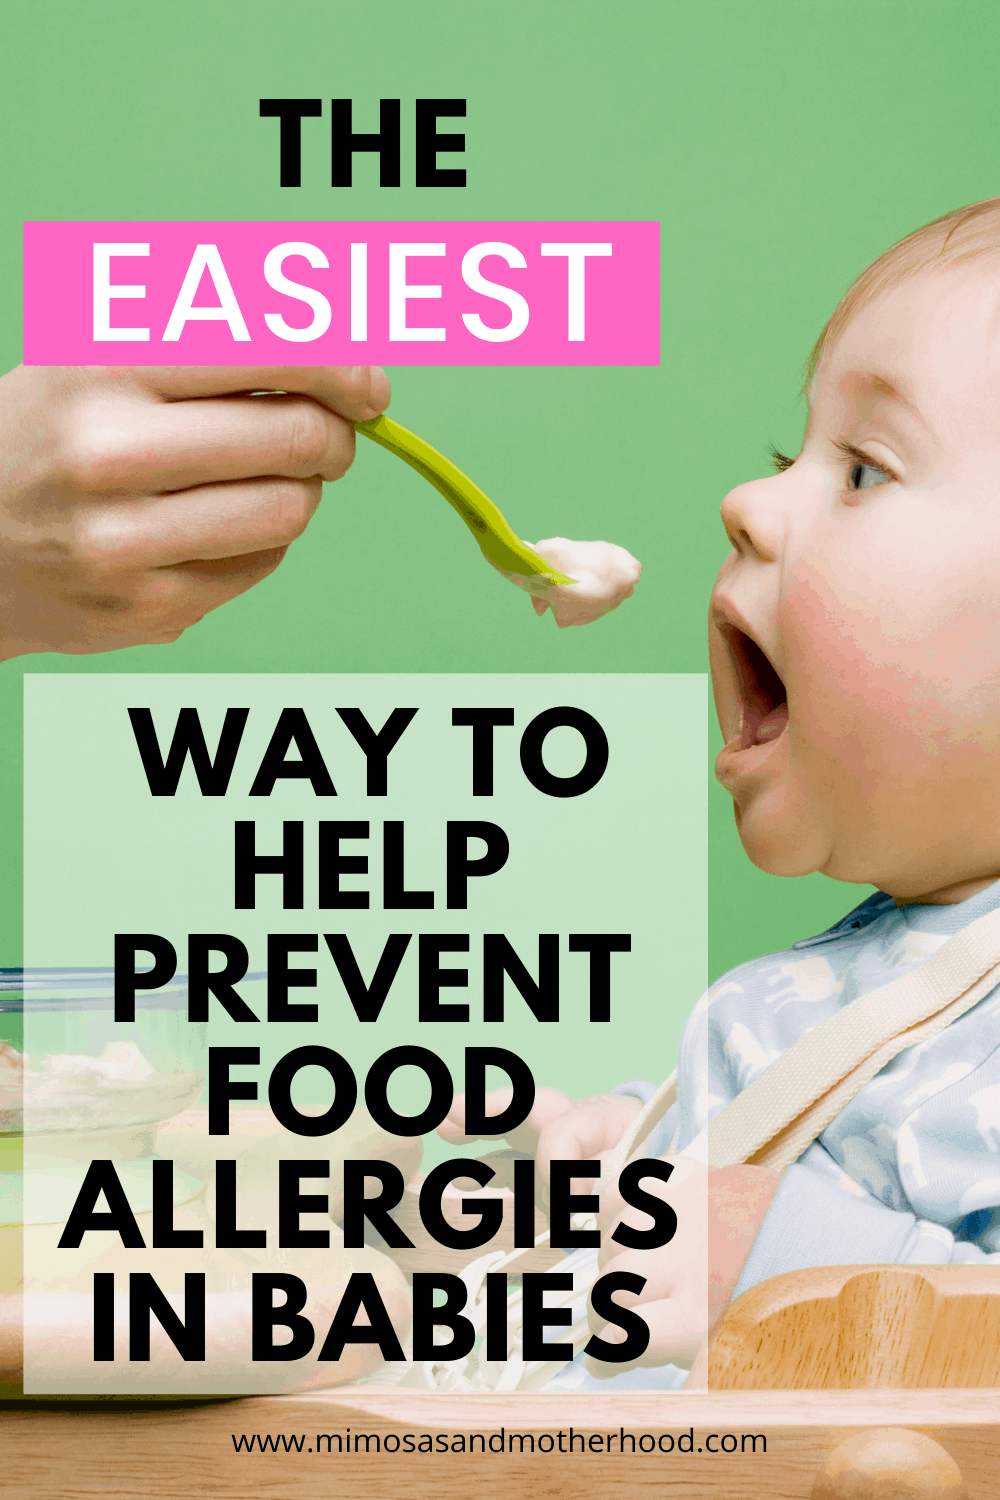 How to Help Prevent Food Allergies in Babies â Mimosas and Motherhood